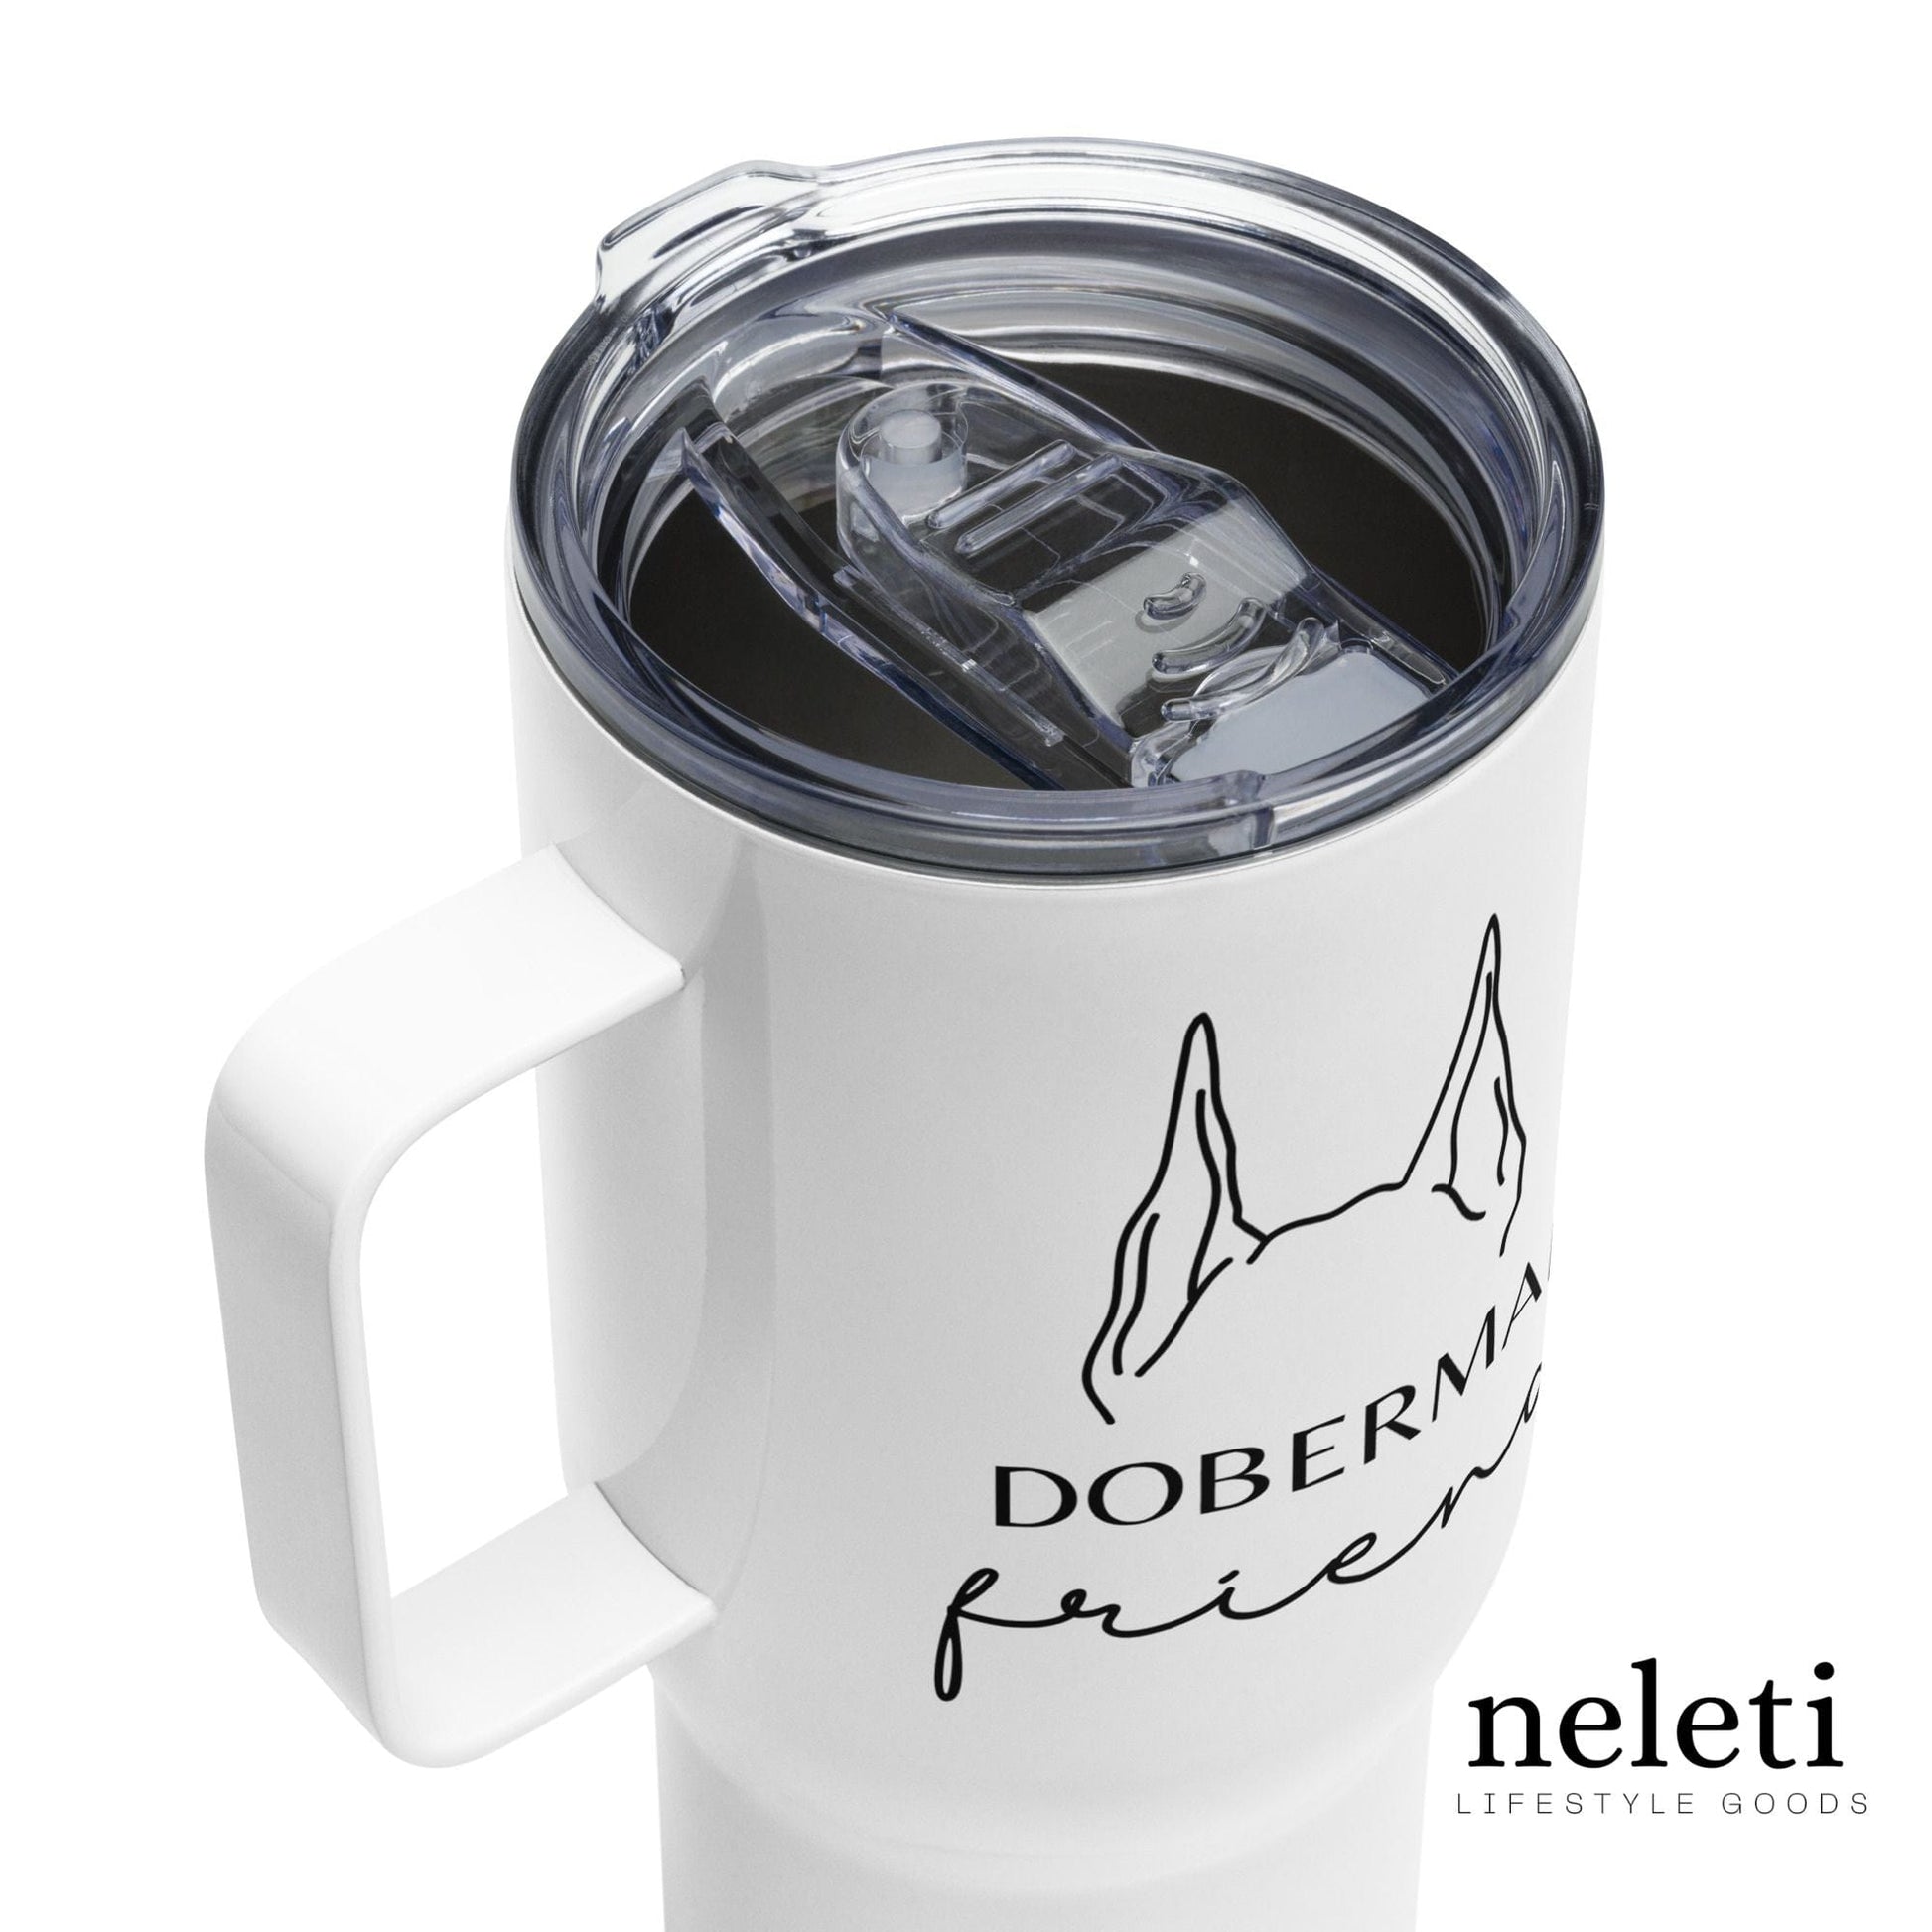 neleti.com-custom-travel-mug-with-dog-ears